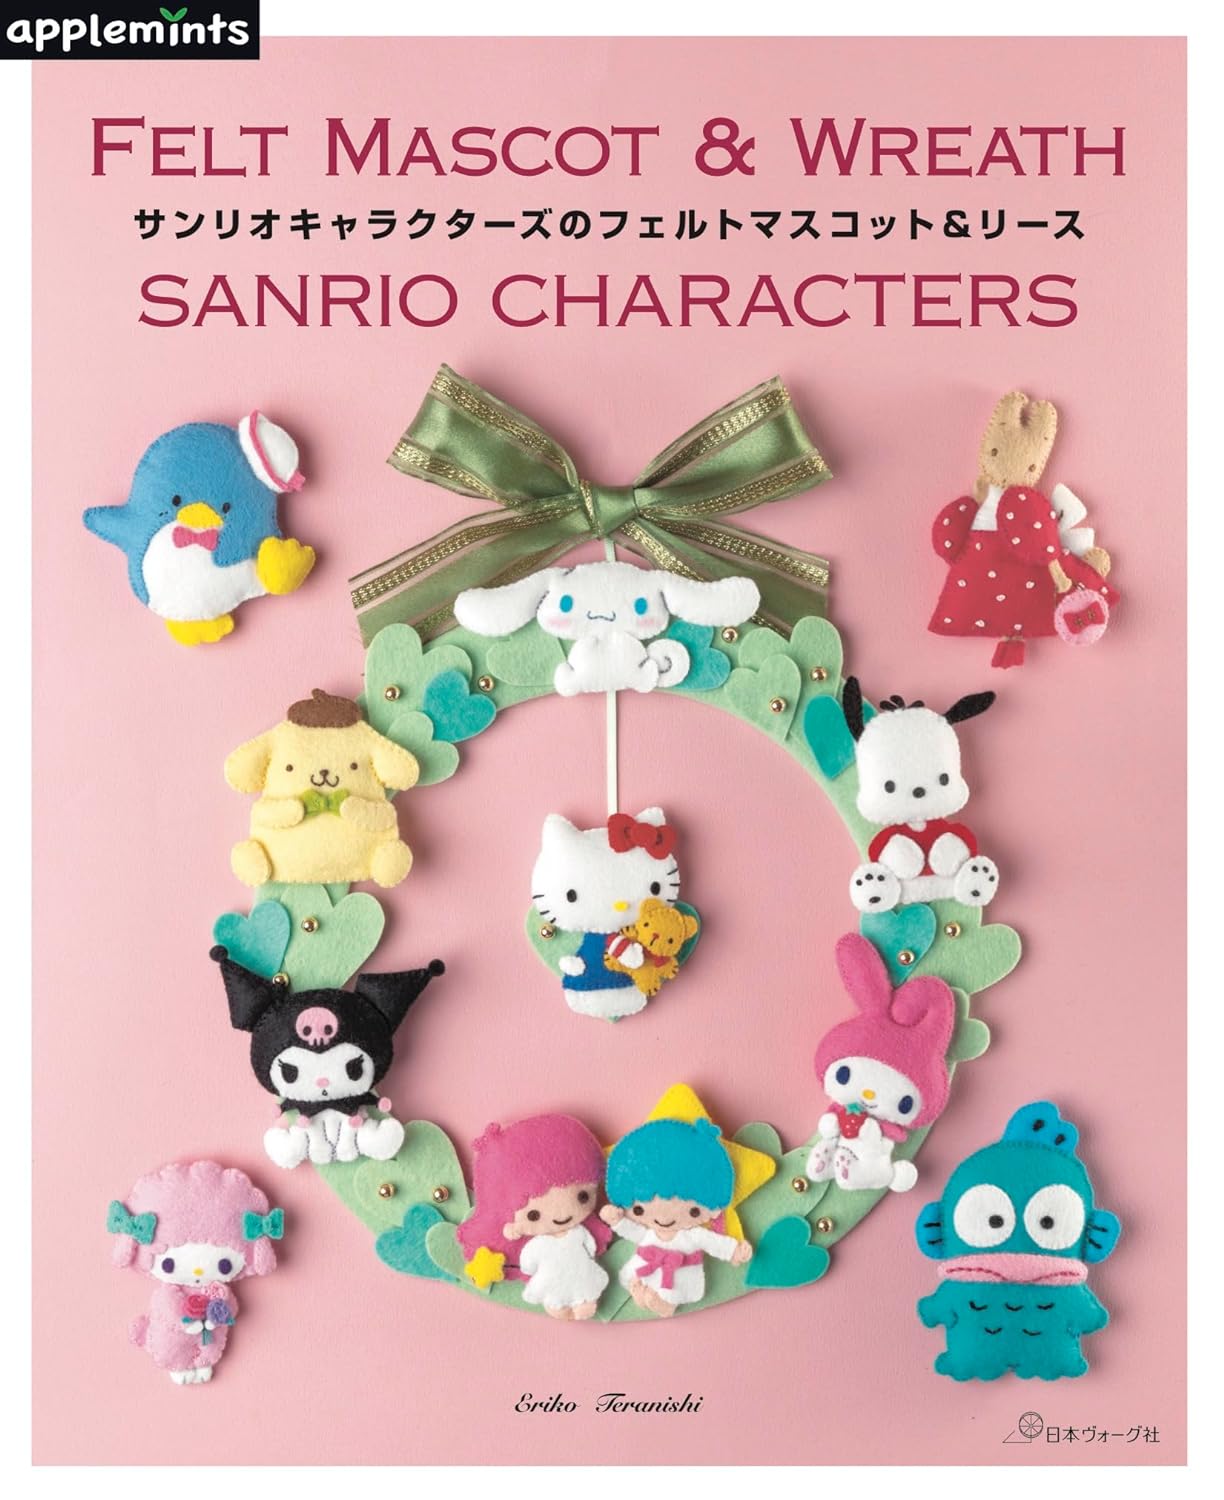 NV72198 Sanrio Characters felt mascot & wreath by Eriko Teranishi(book)